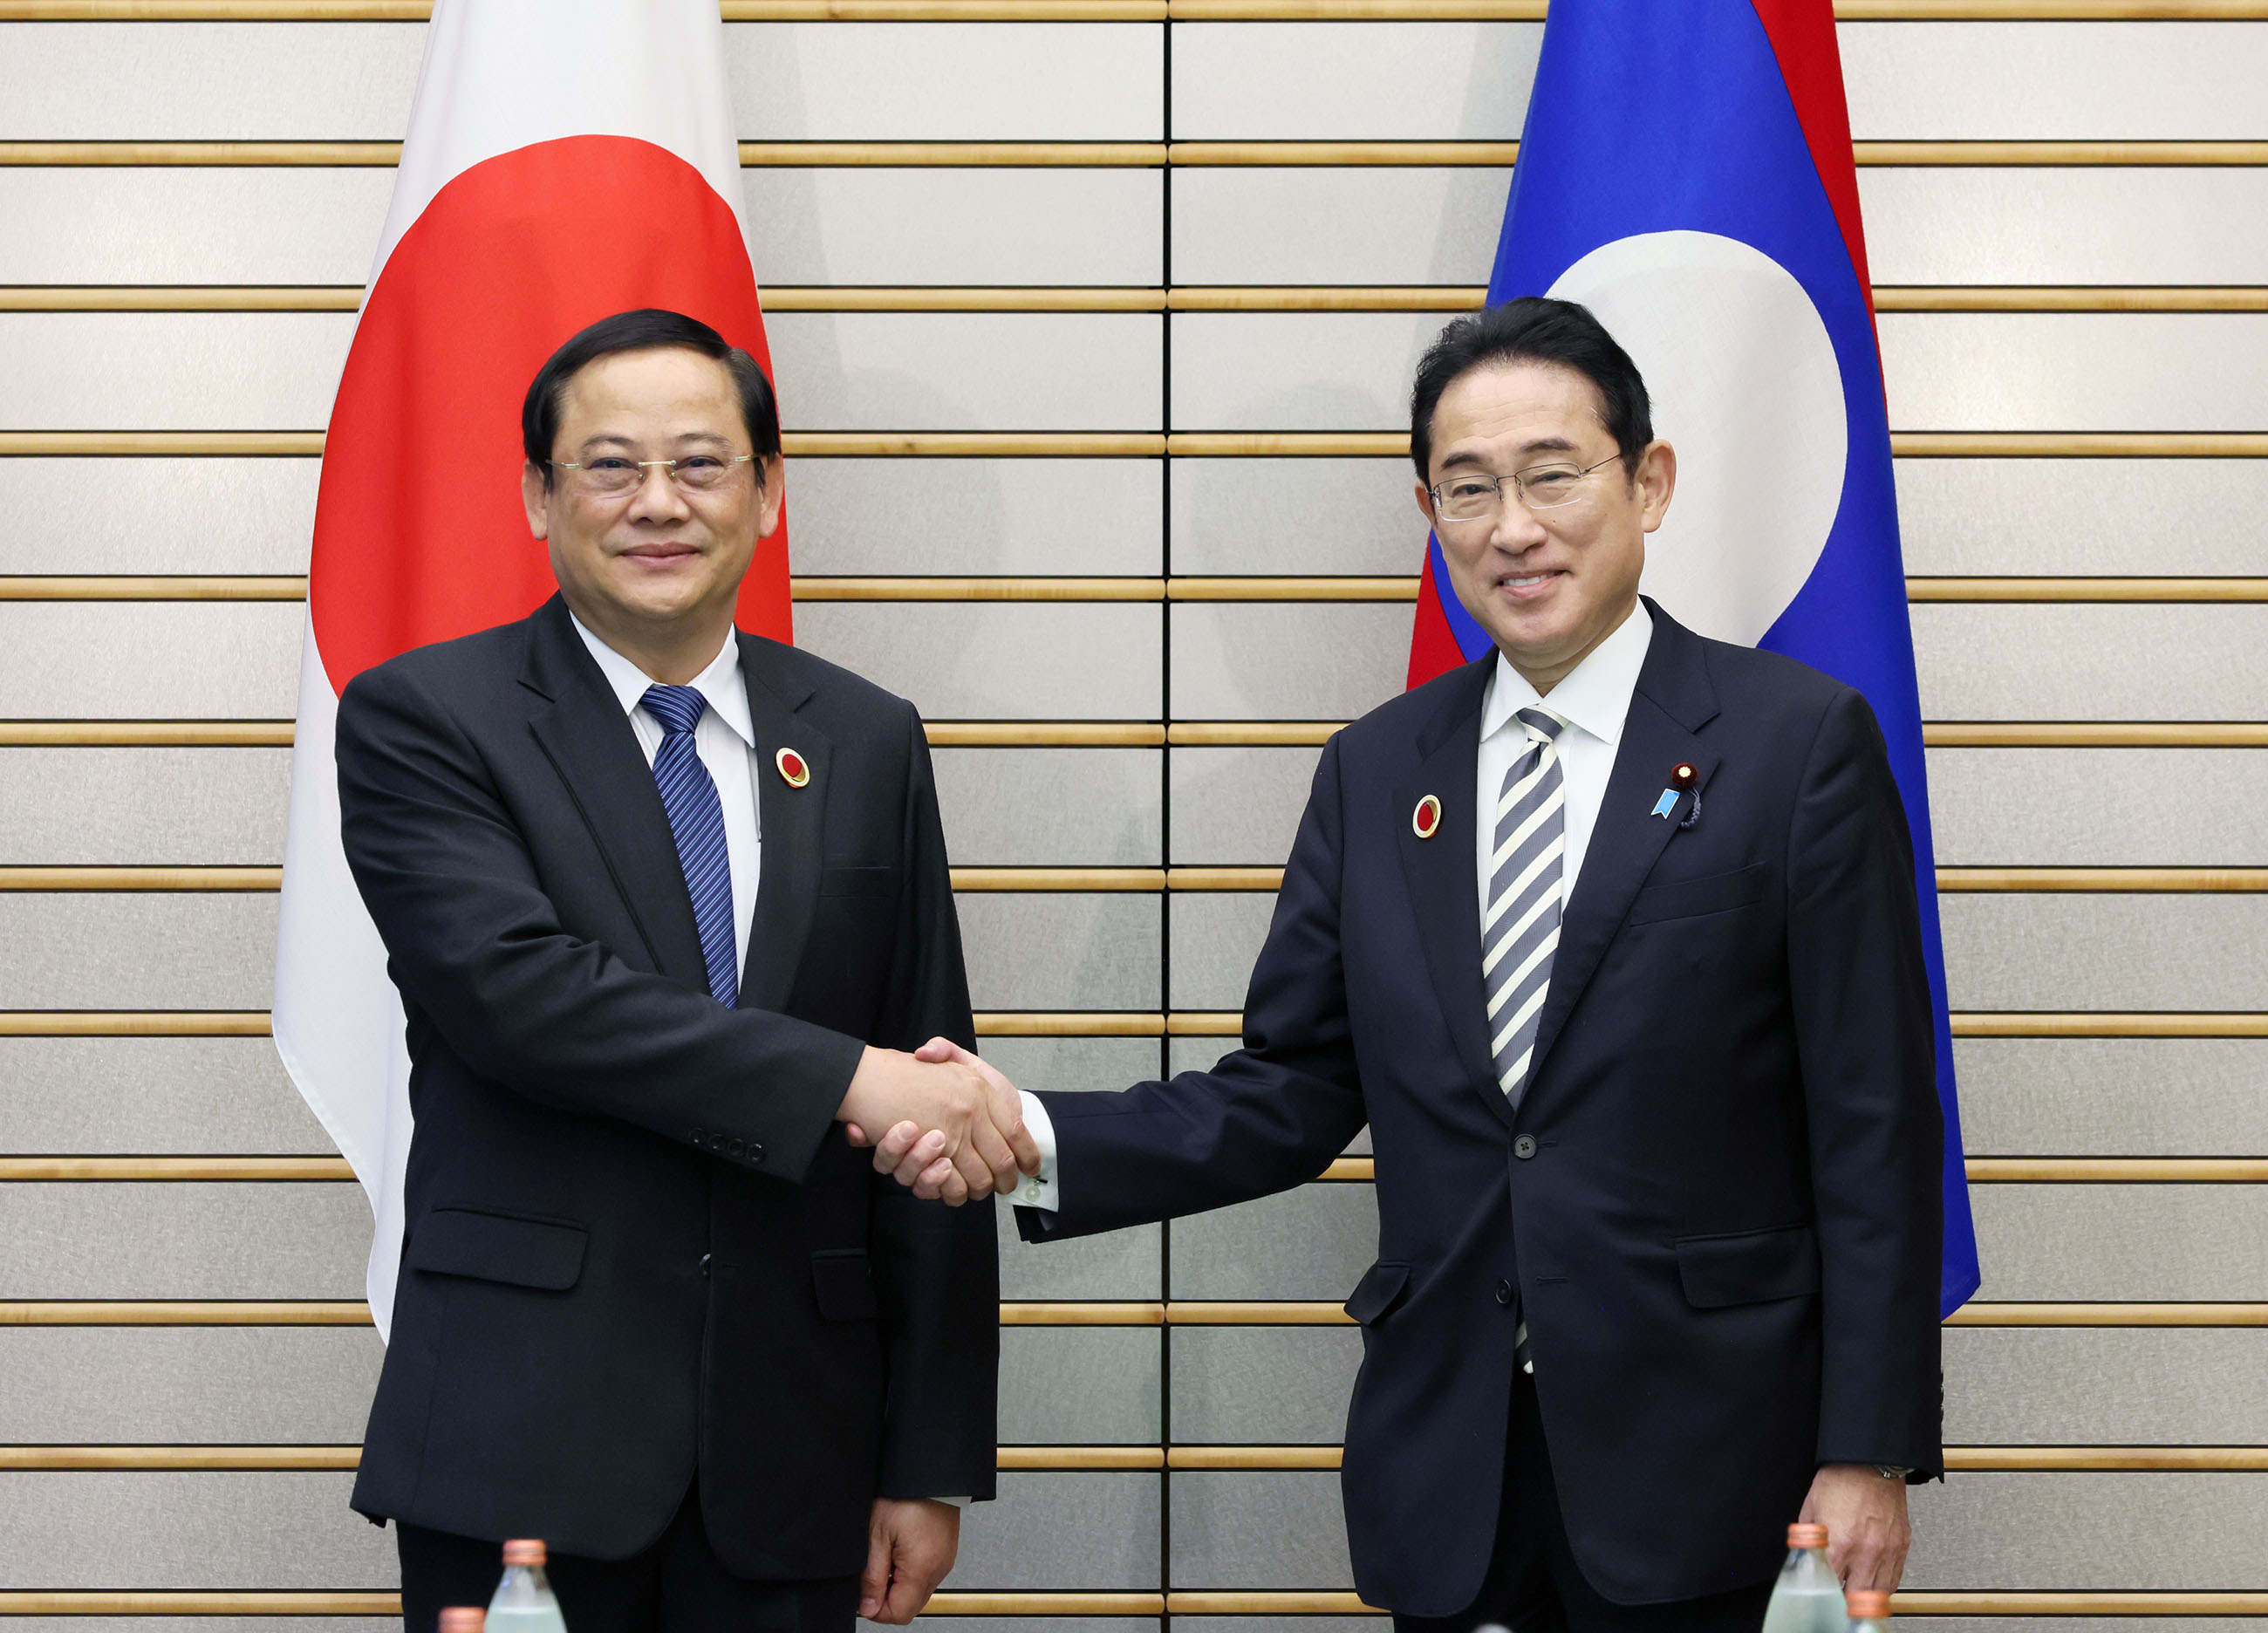 Japan-Laos Summit meeting (2)